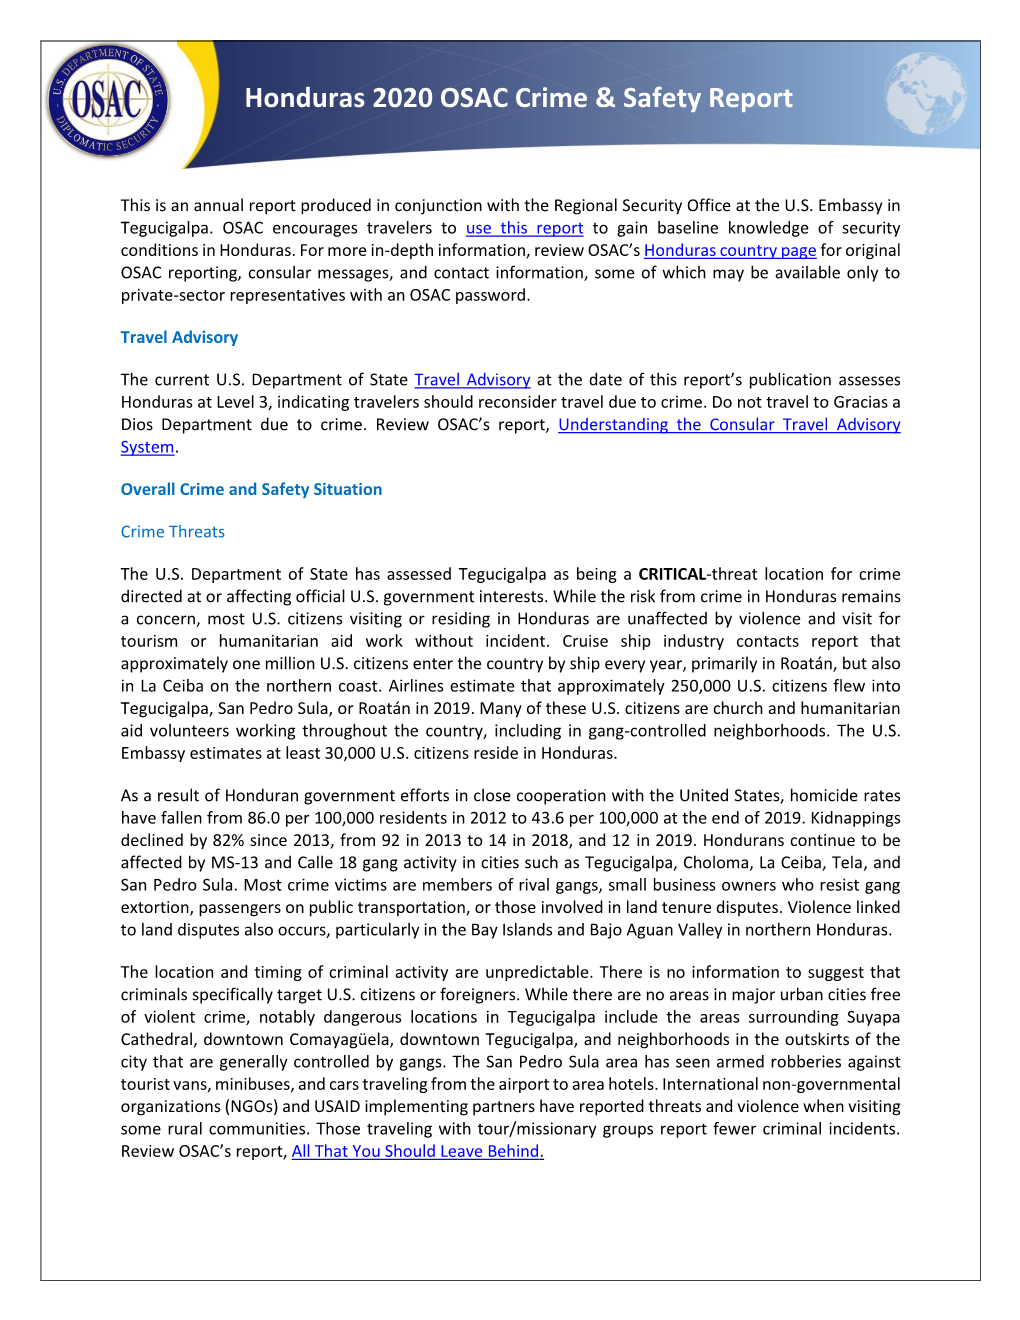 Honduras 2020 OSAC Crime & Safety Report DocsLib